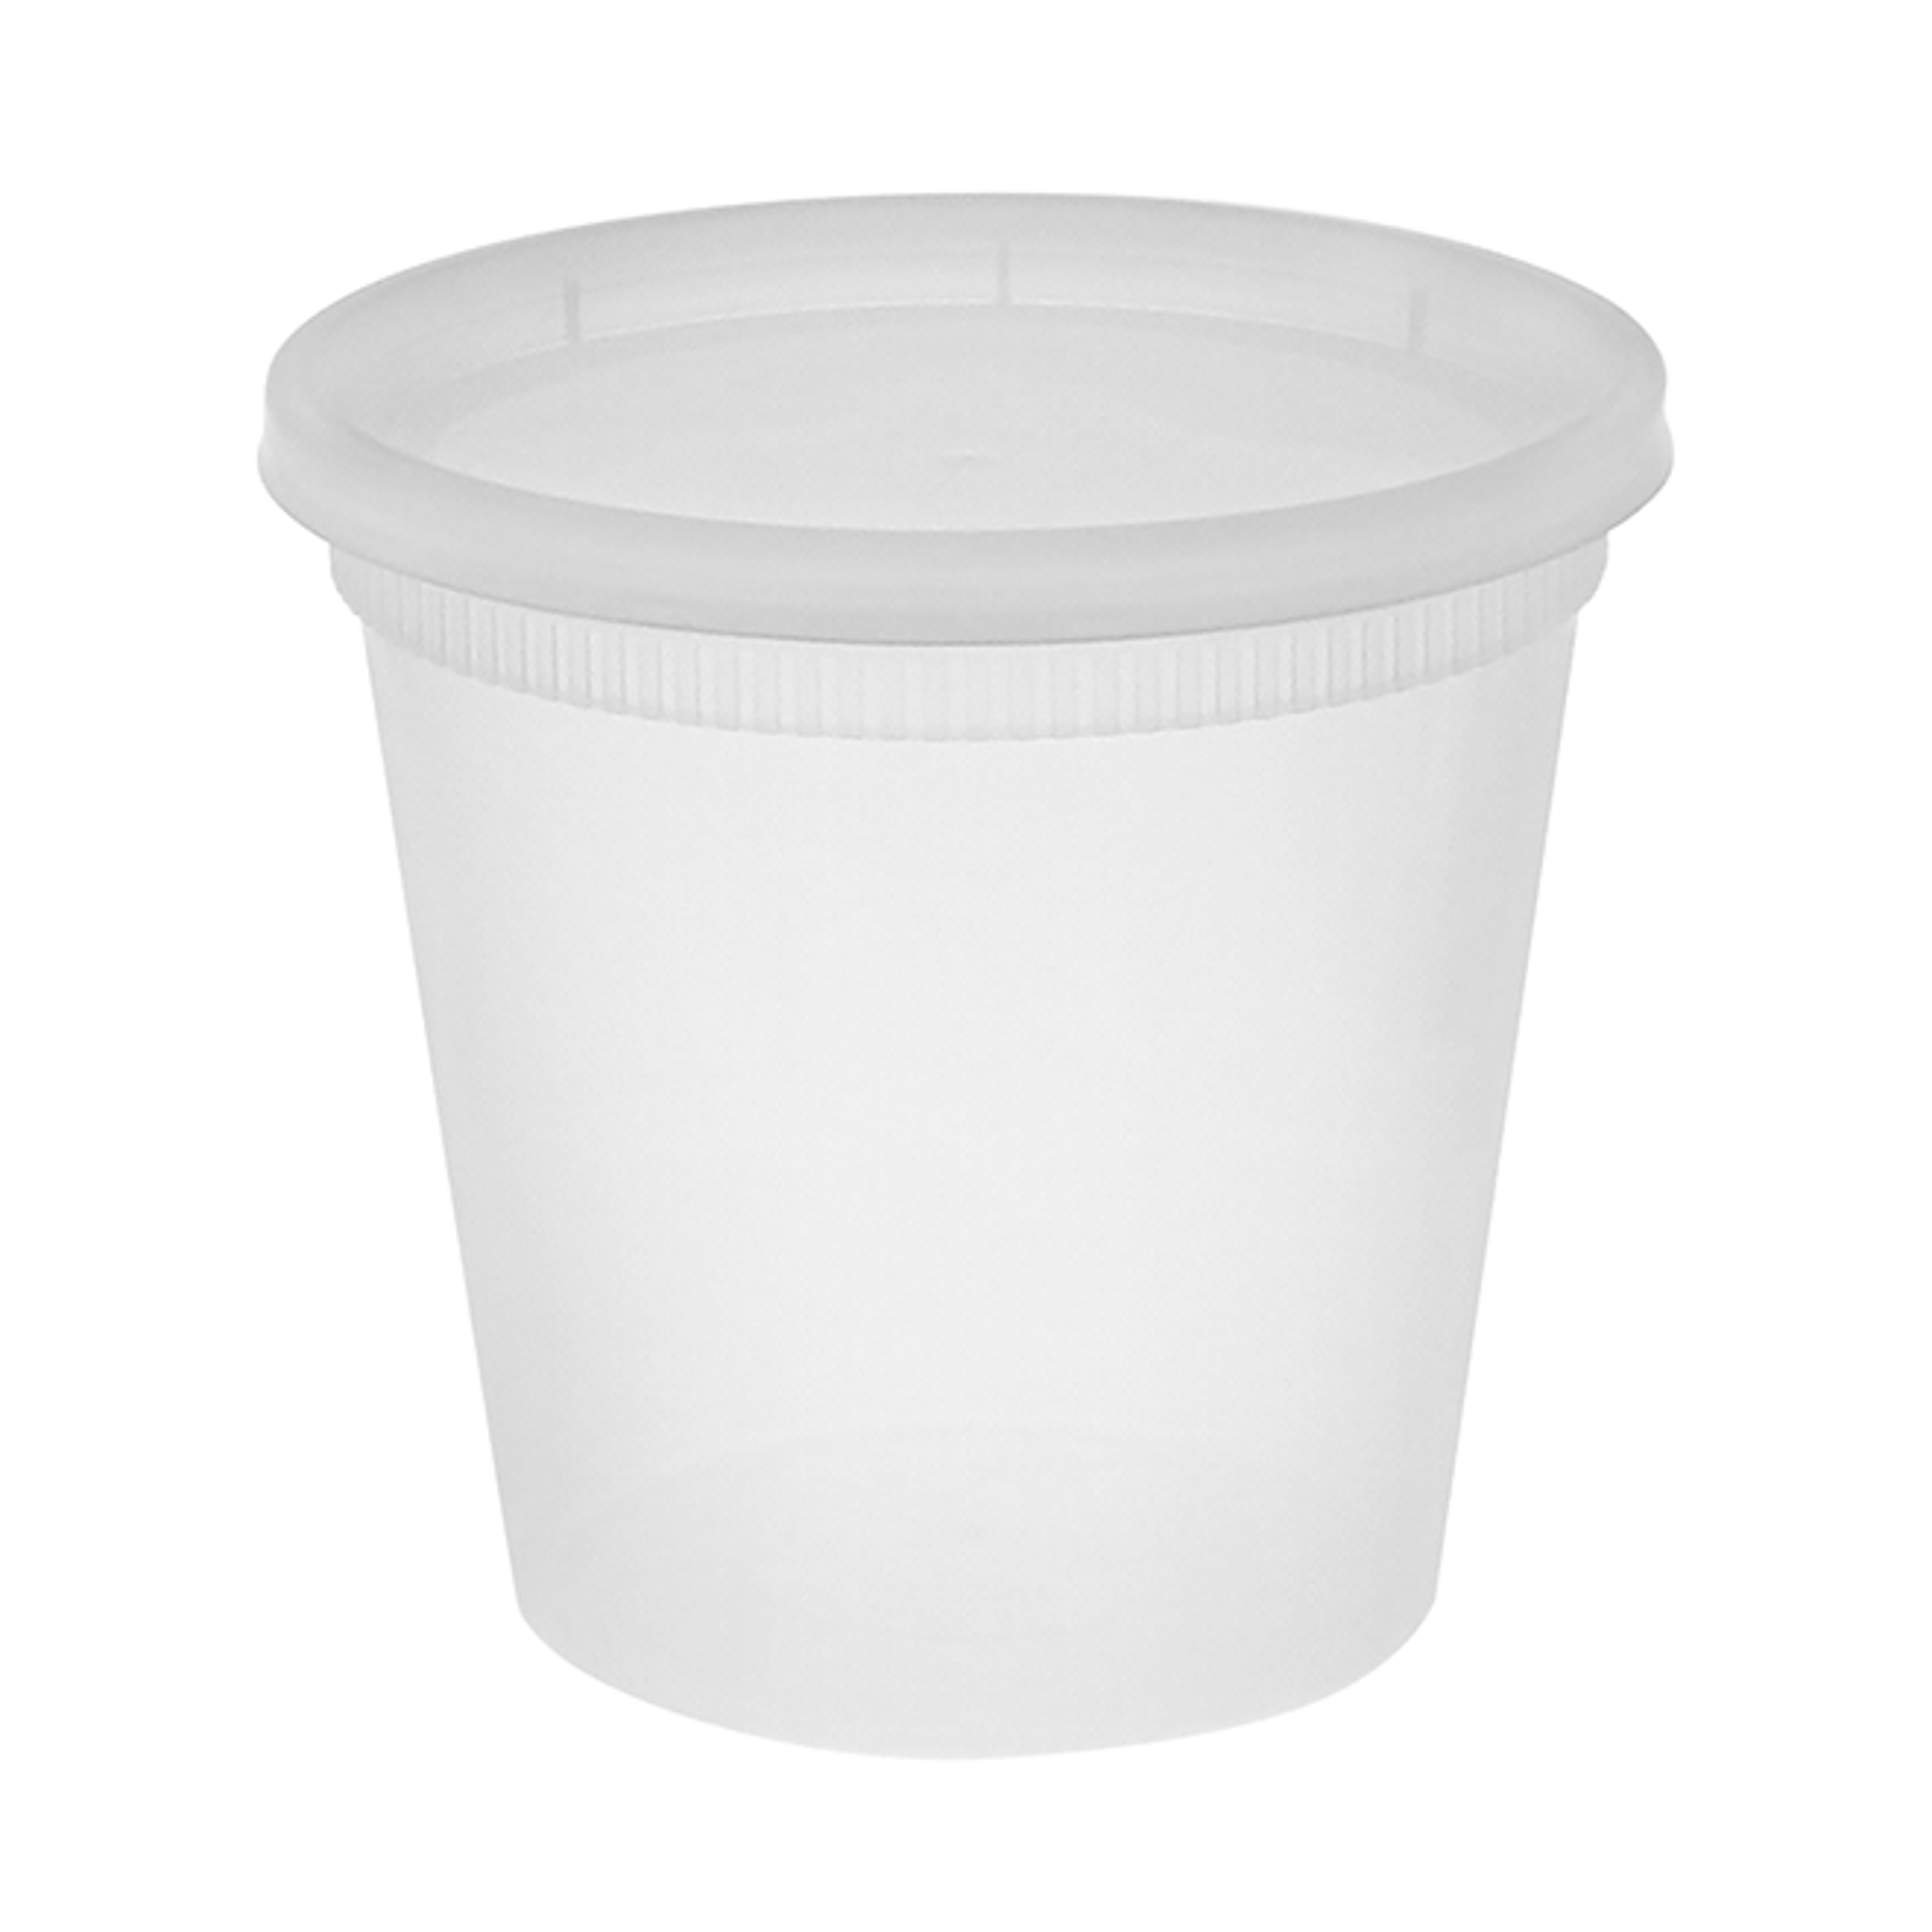 Yocup 24 oz Translucent Plastic Round Deli Container w/ Lid Combo (v2) - 1  case (240 set)